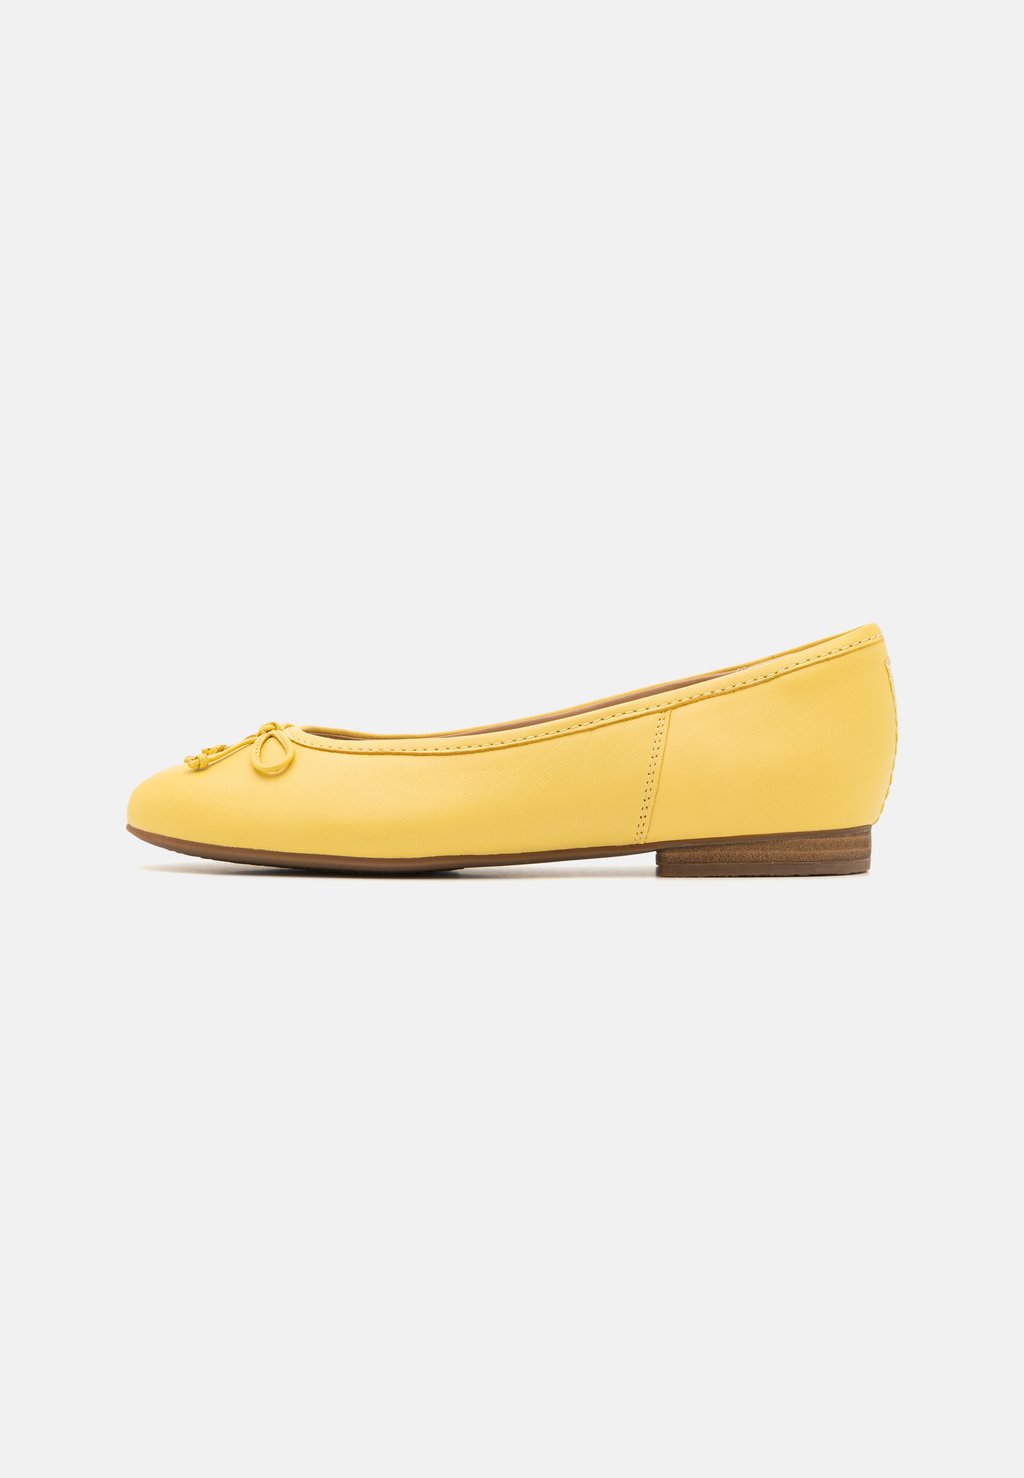 Балетки Fawna Clarks, цвет yellow leather цена и фото